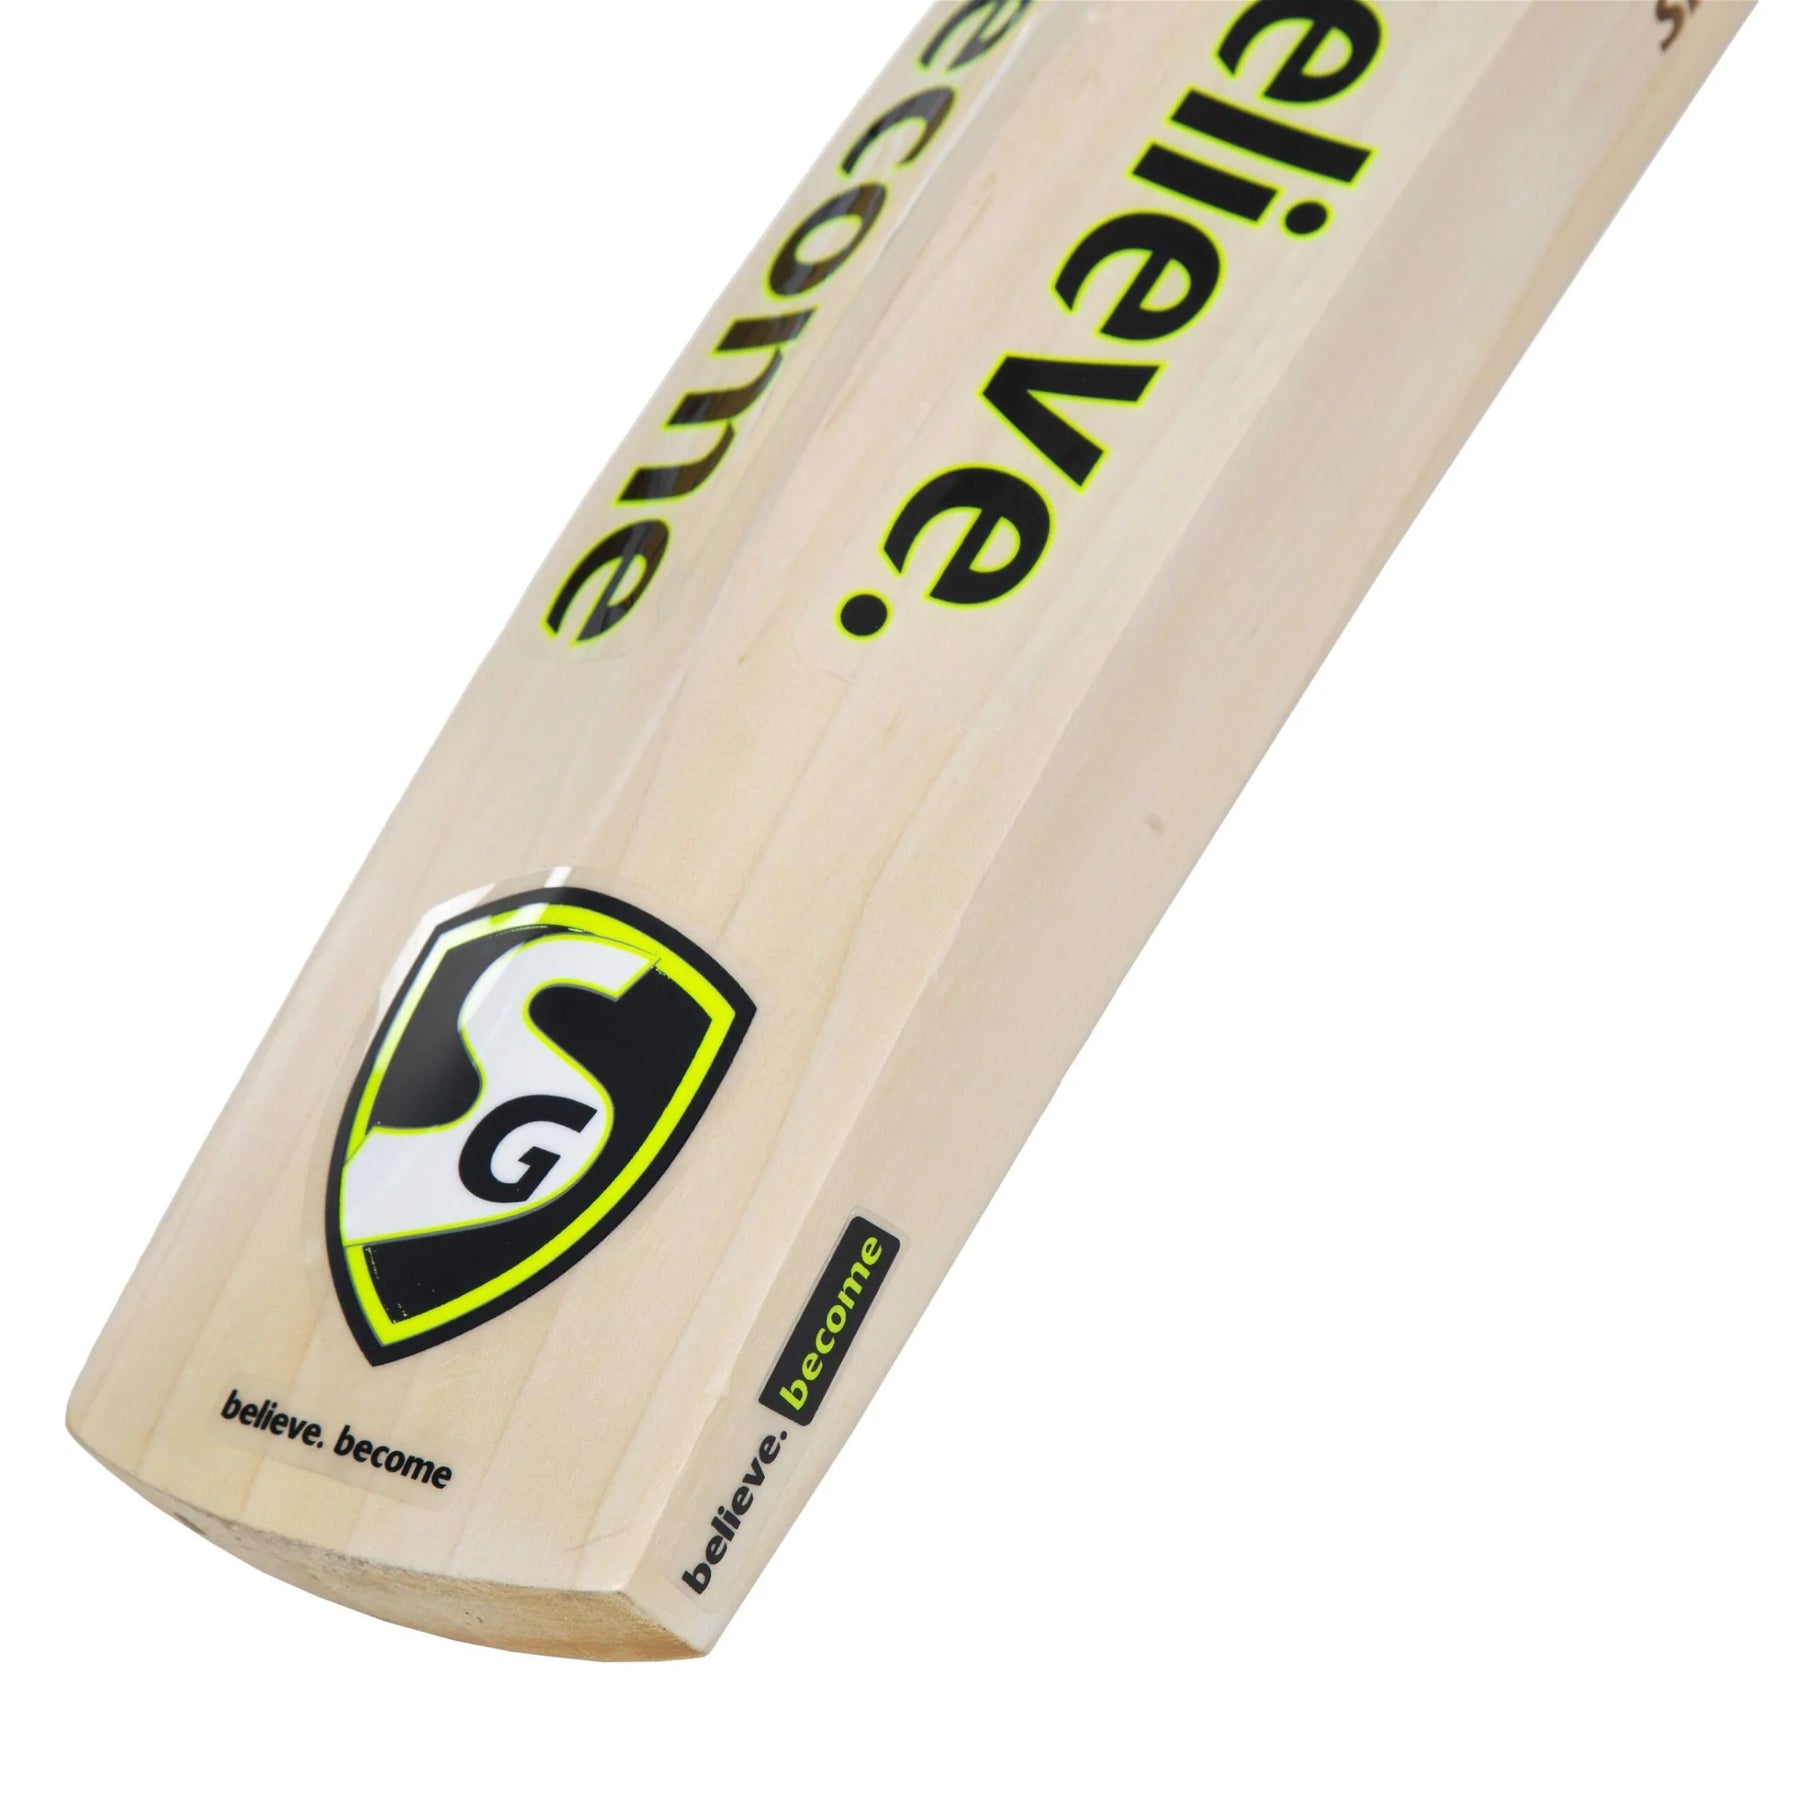 SG Sierra 250 English Willow Cricket Bat